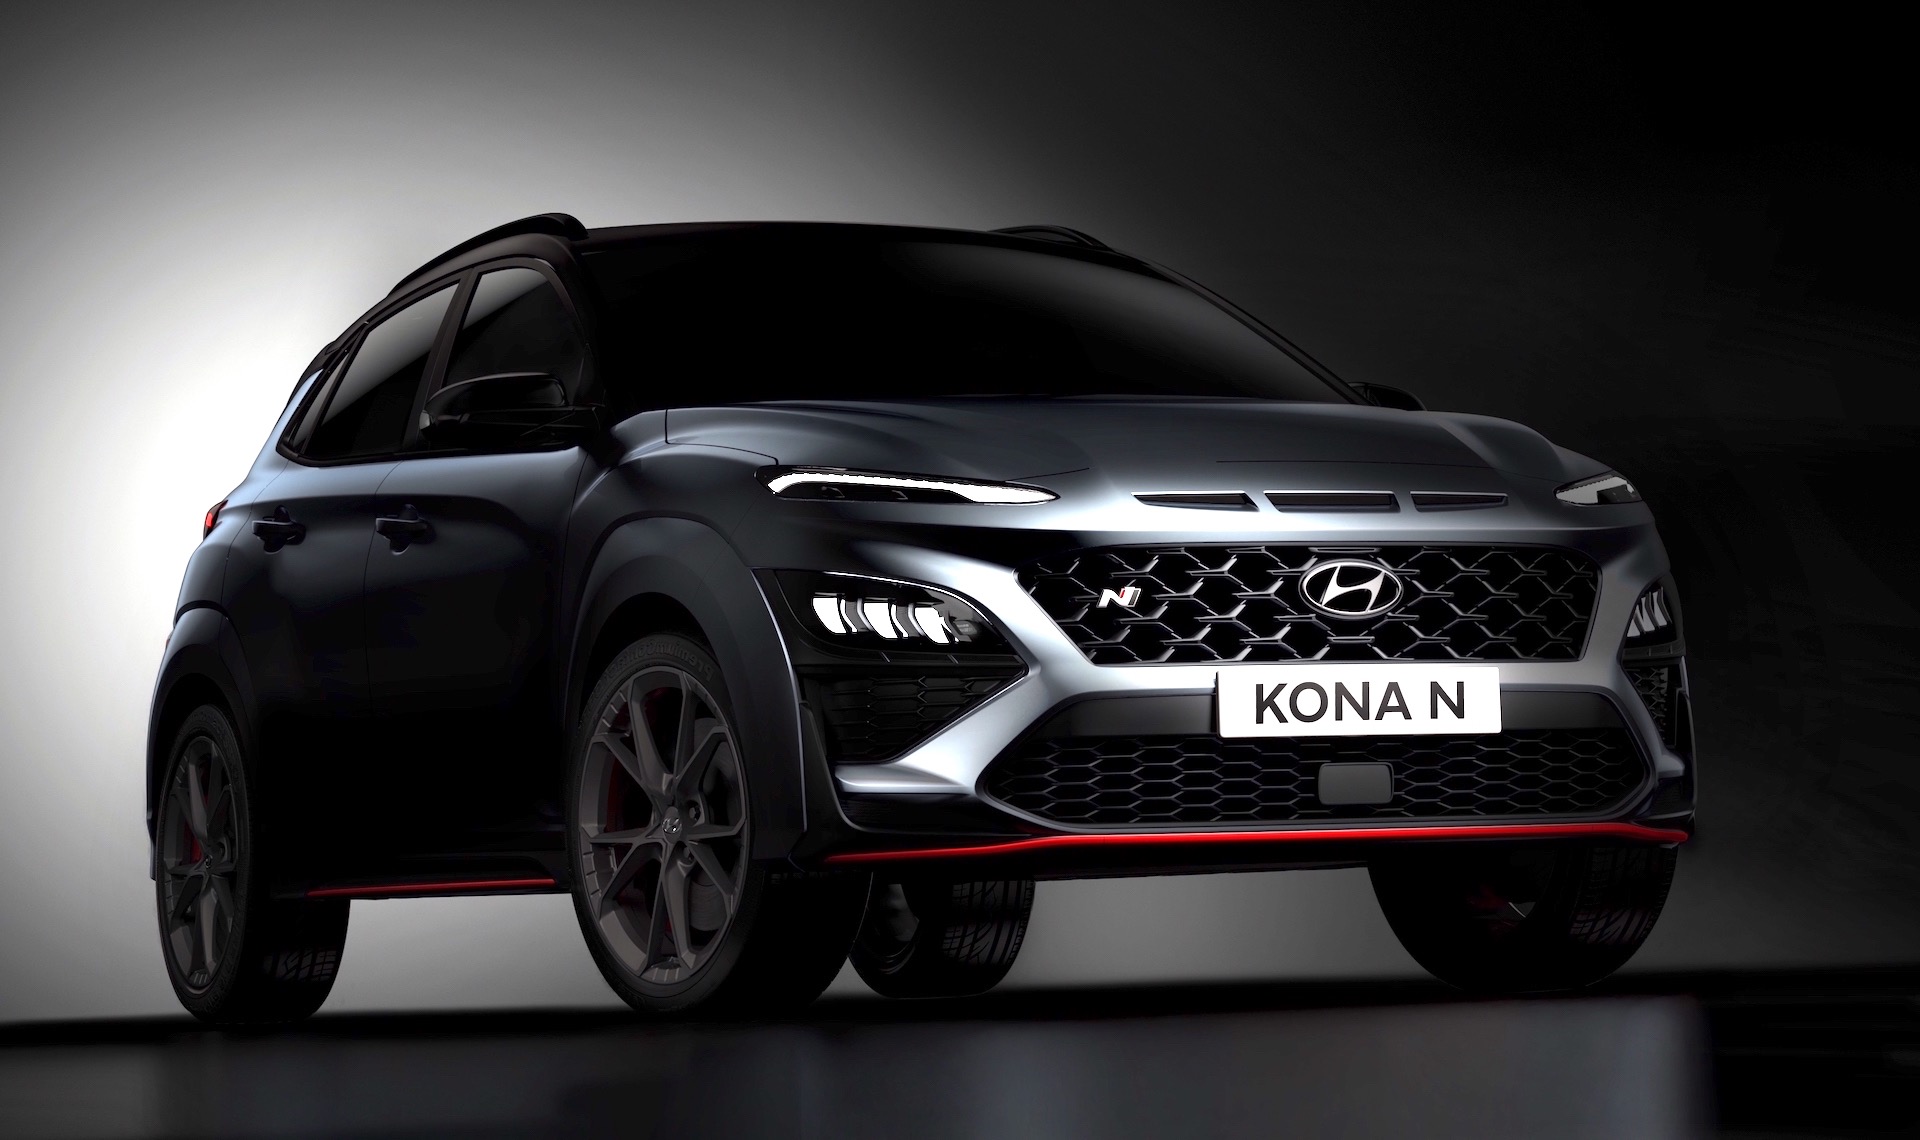 Hyundai Kona N previewed again, exterior revealed